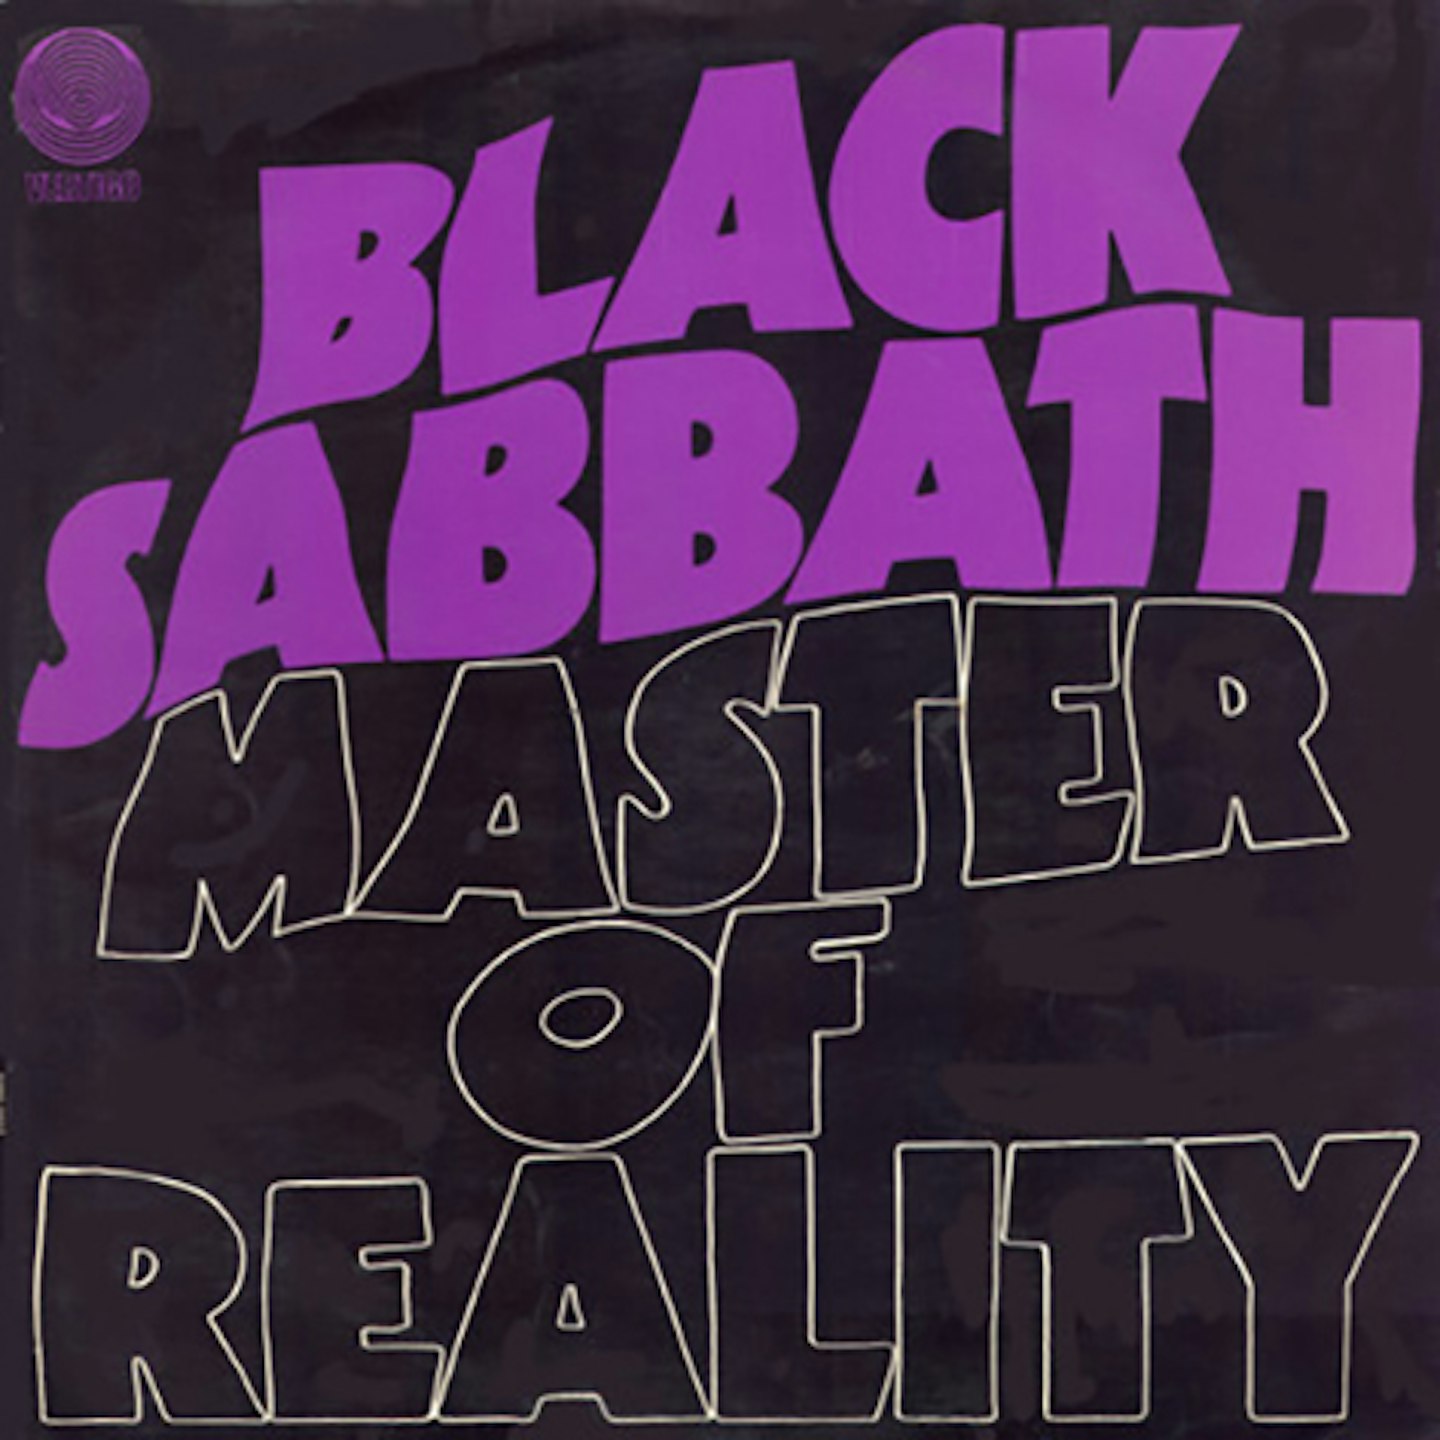 The greatest Black Sabbath albums revealed